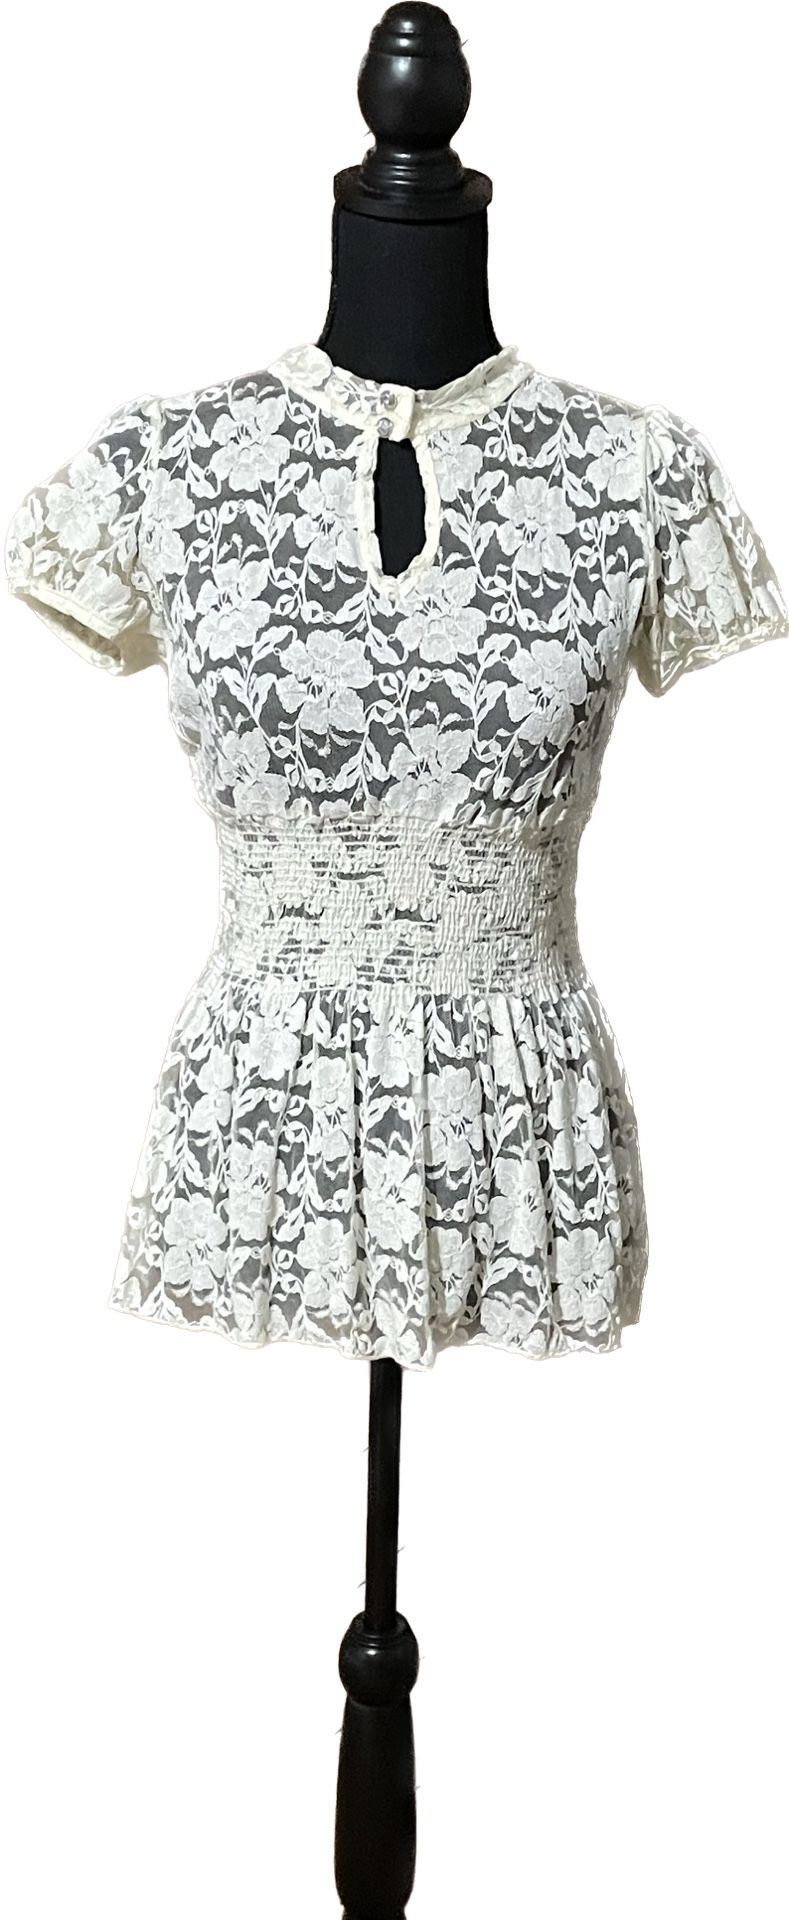 Misope Lace Dress Shirt, Size L